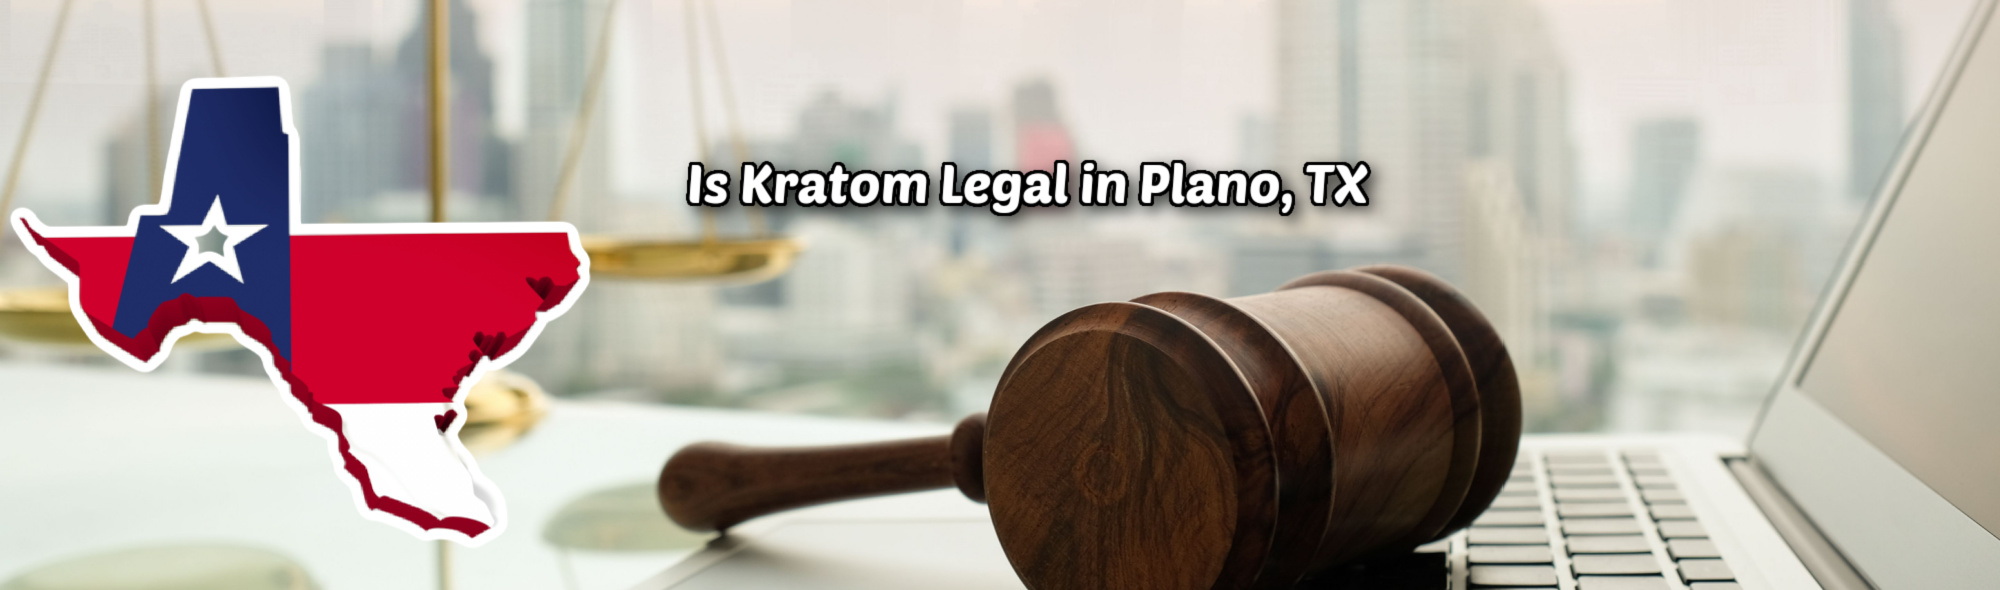 image of is kratom legal in plano tx